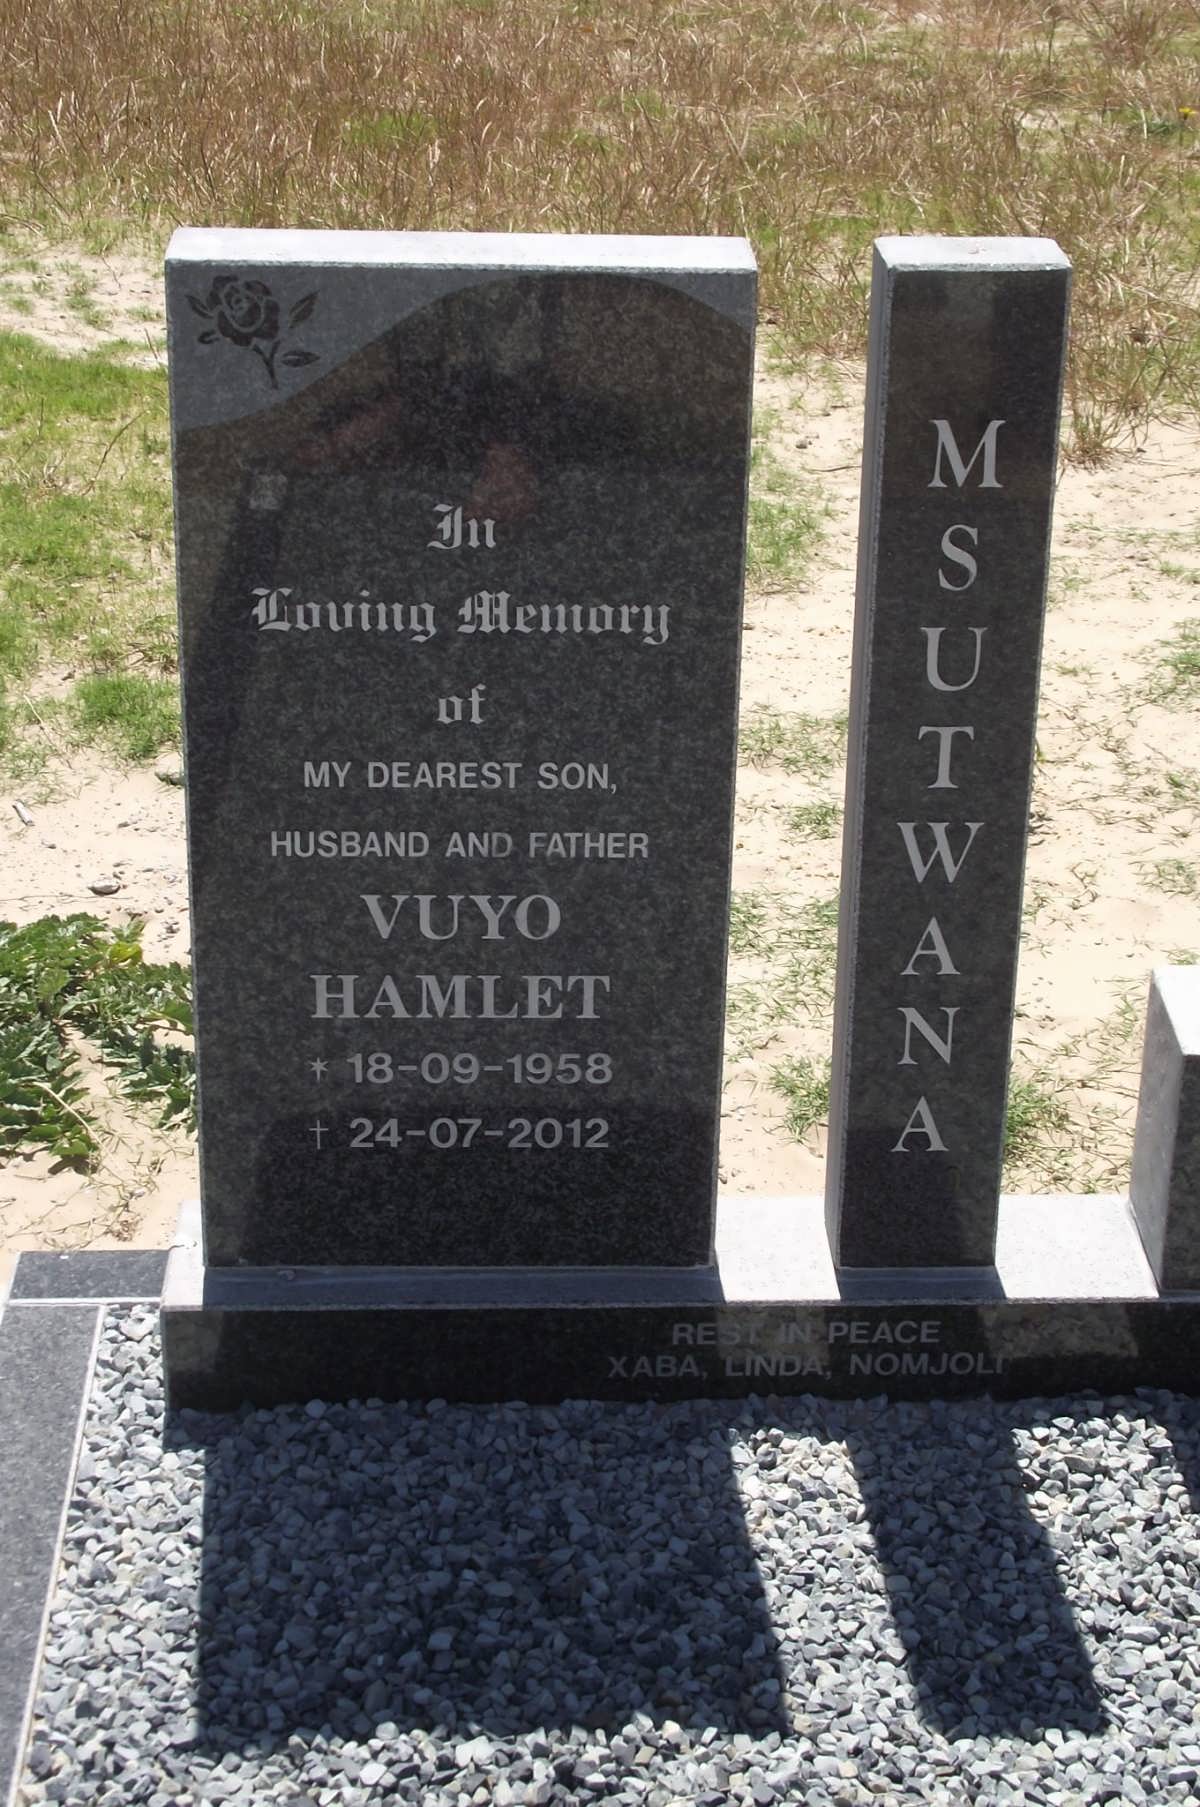 MSUTWANA Vuyo Hamlet 1958-2012